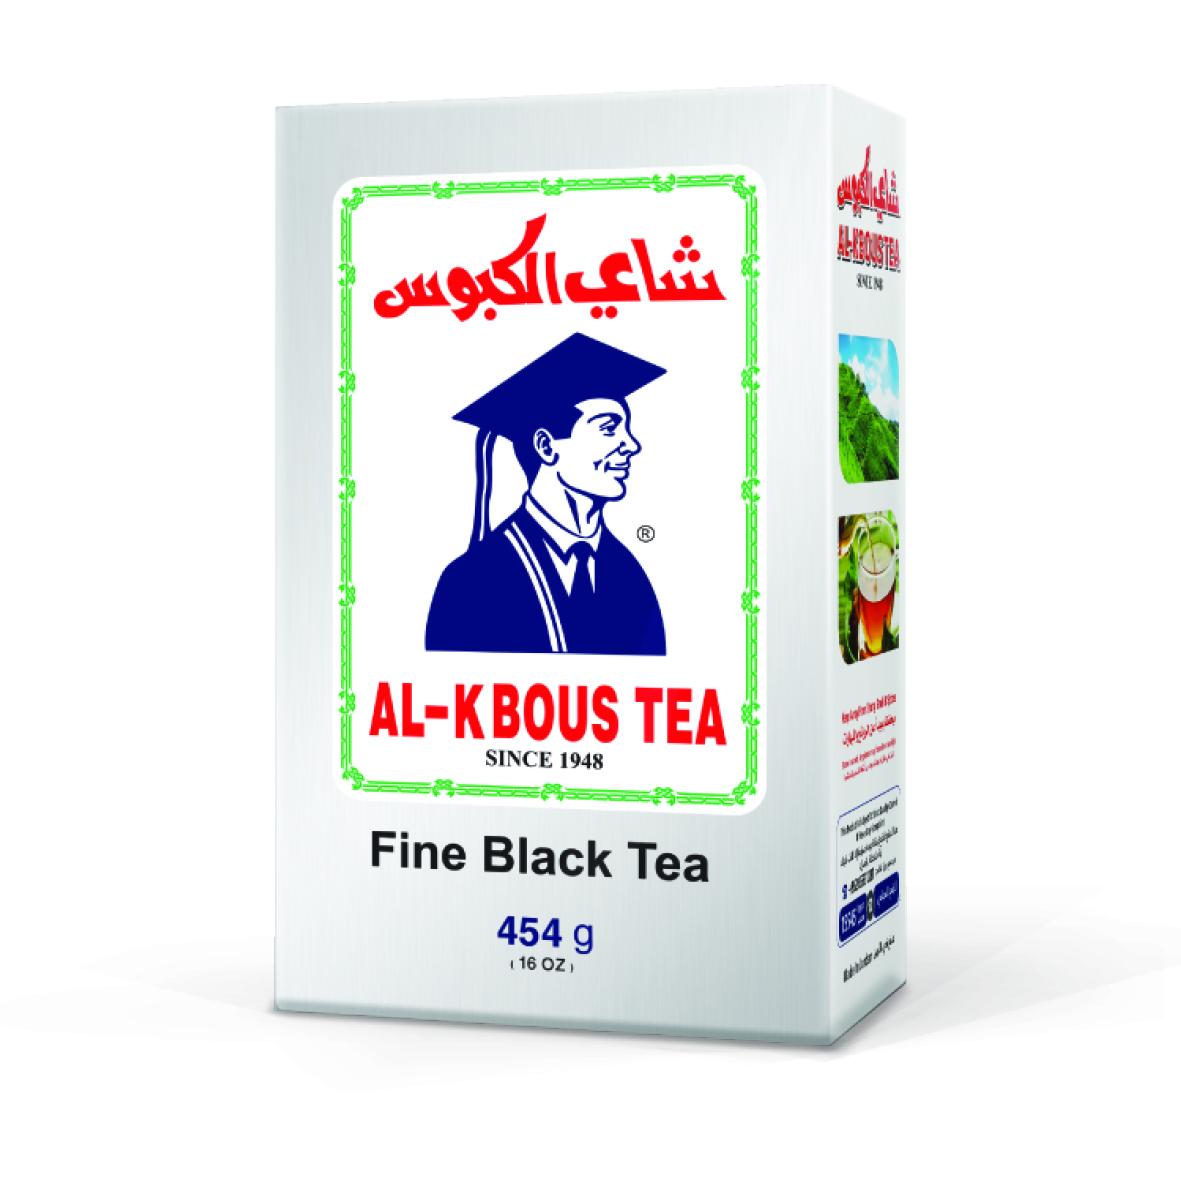 Al-Kabous fine black tea